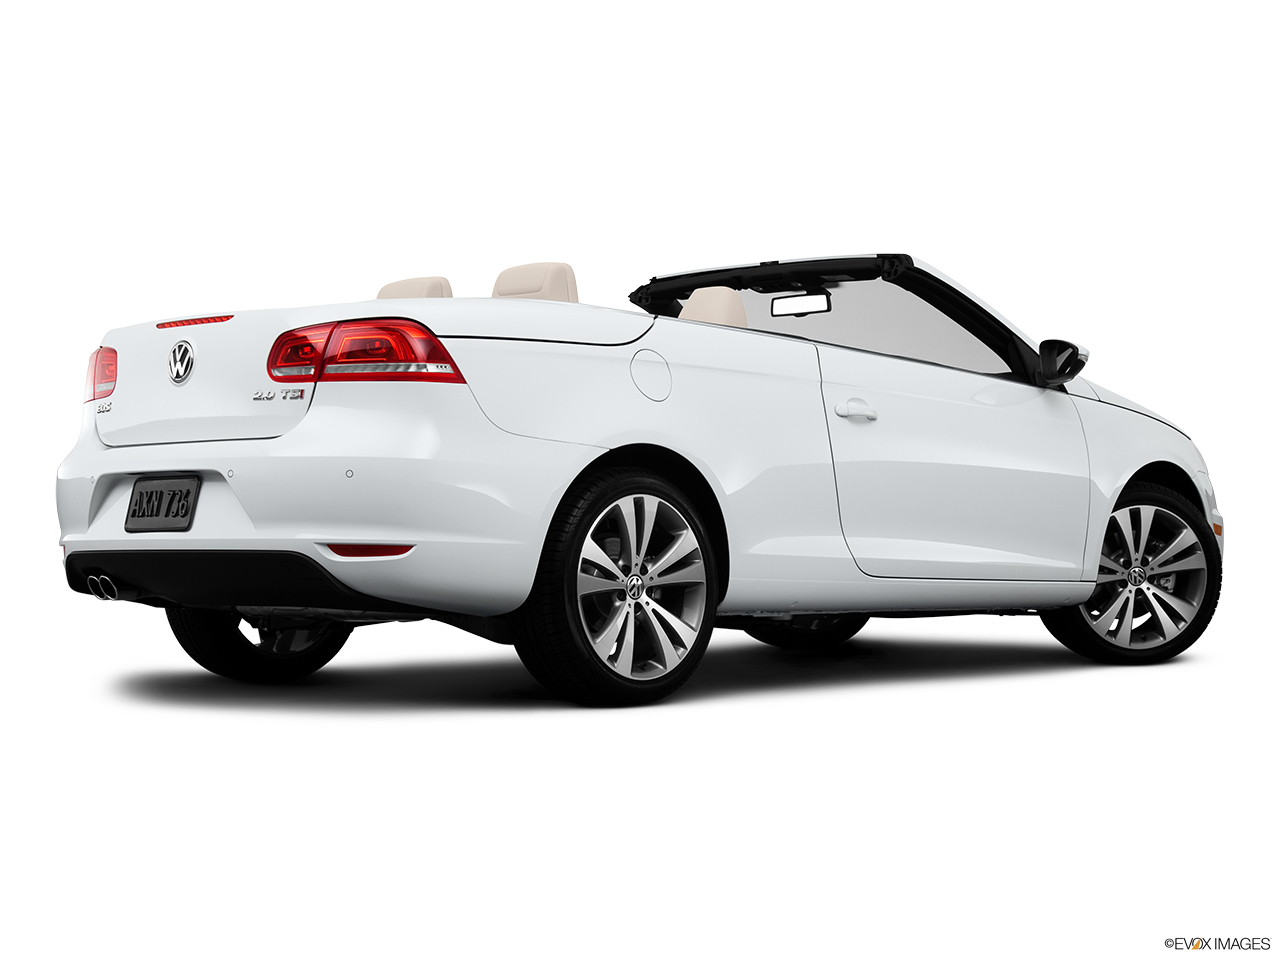 2013 Volkswagen Eos Lux Low/wide rear 5/8. 